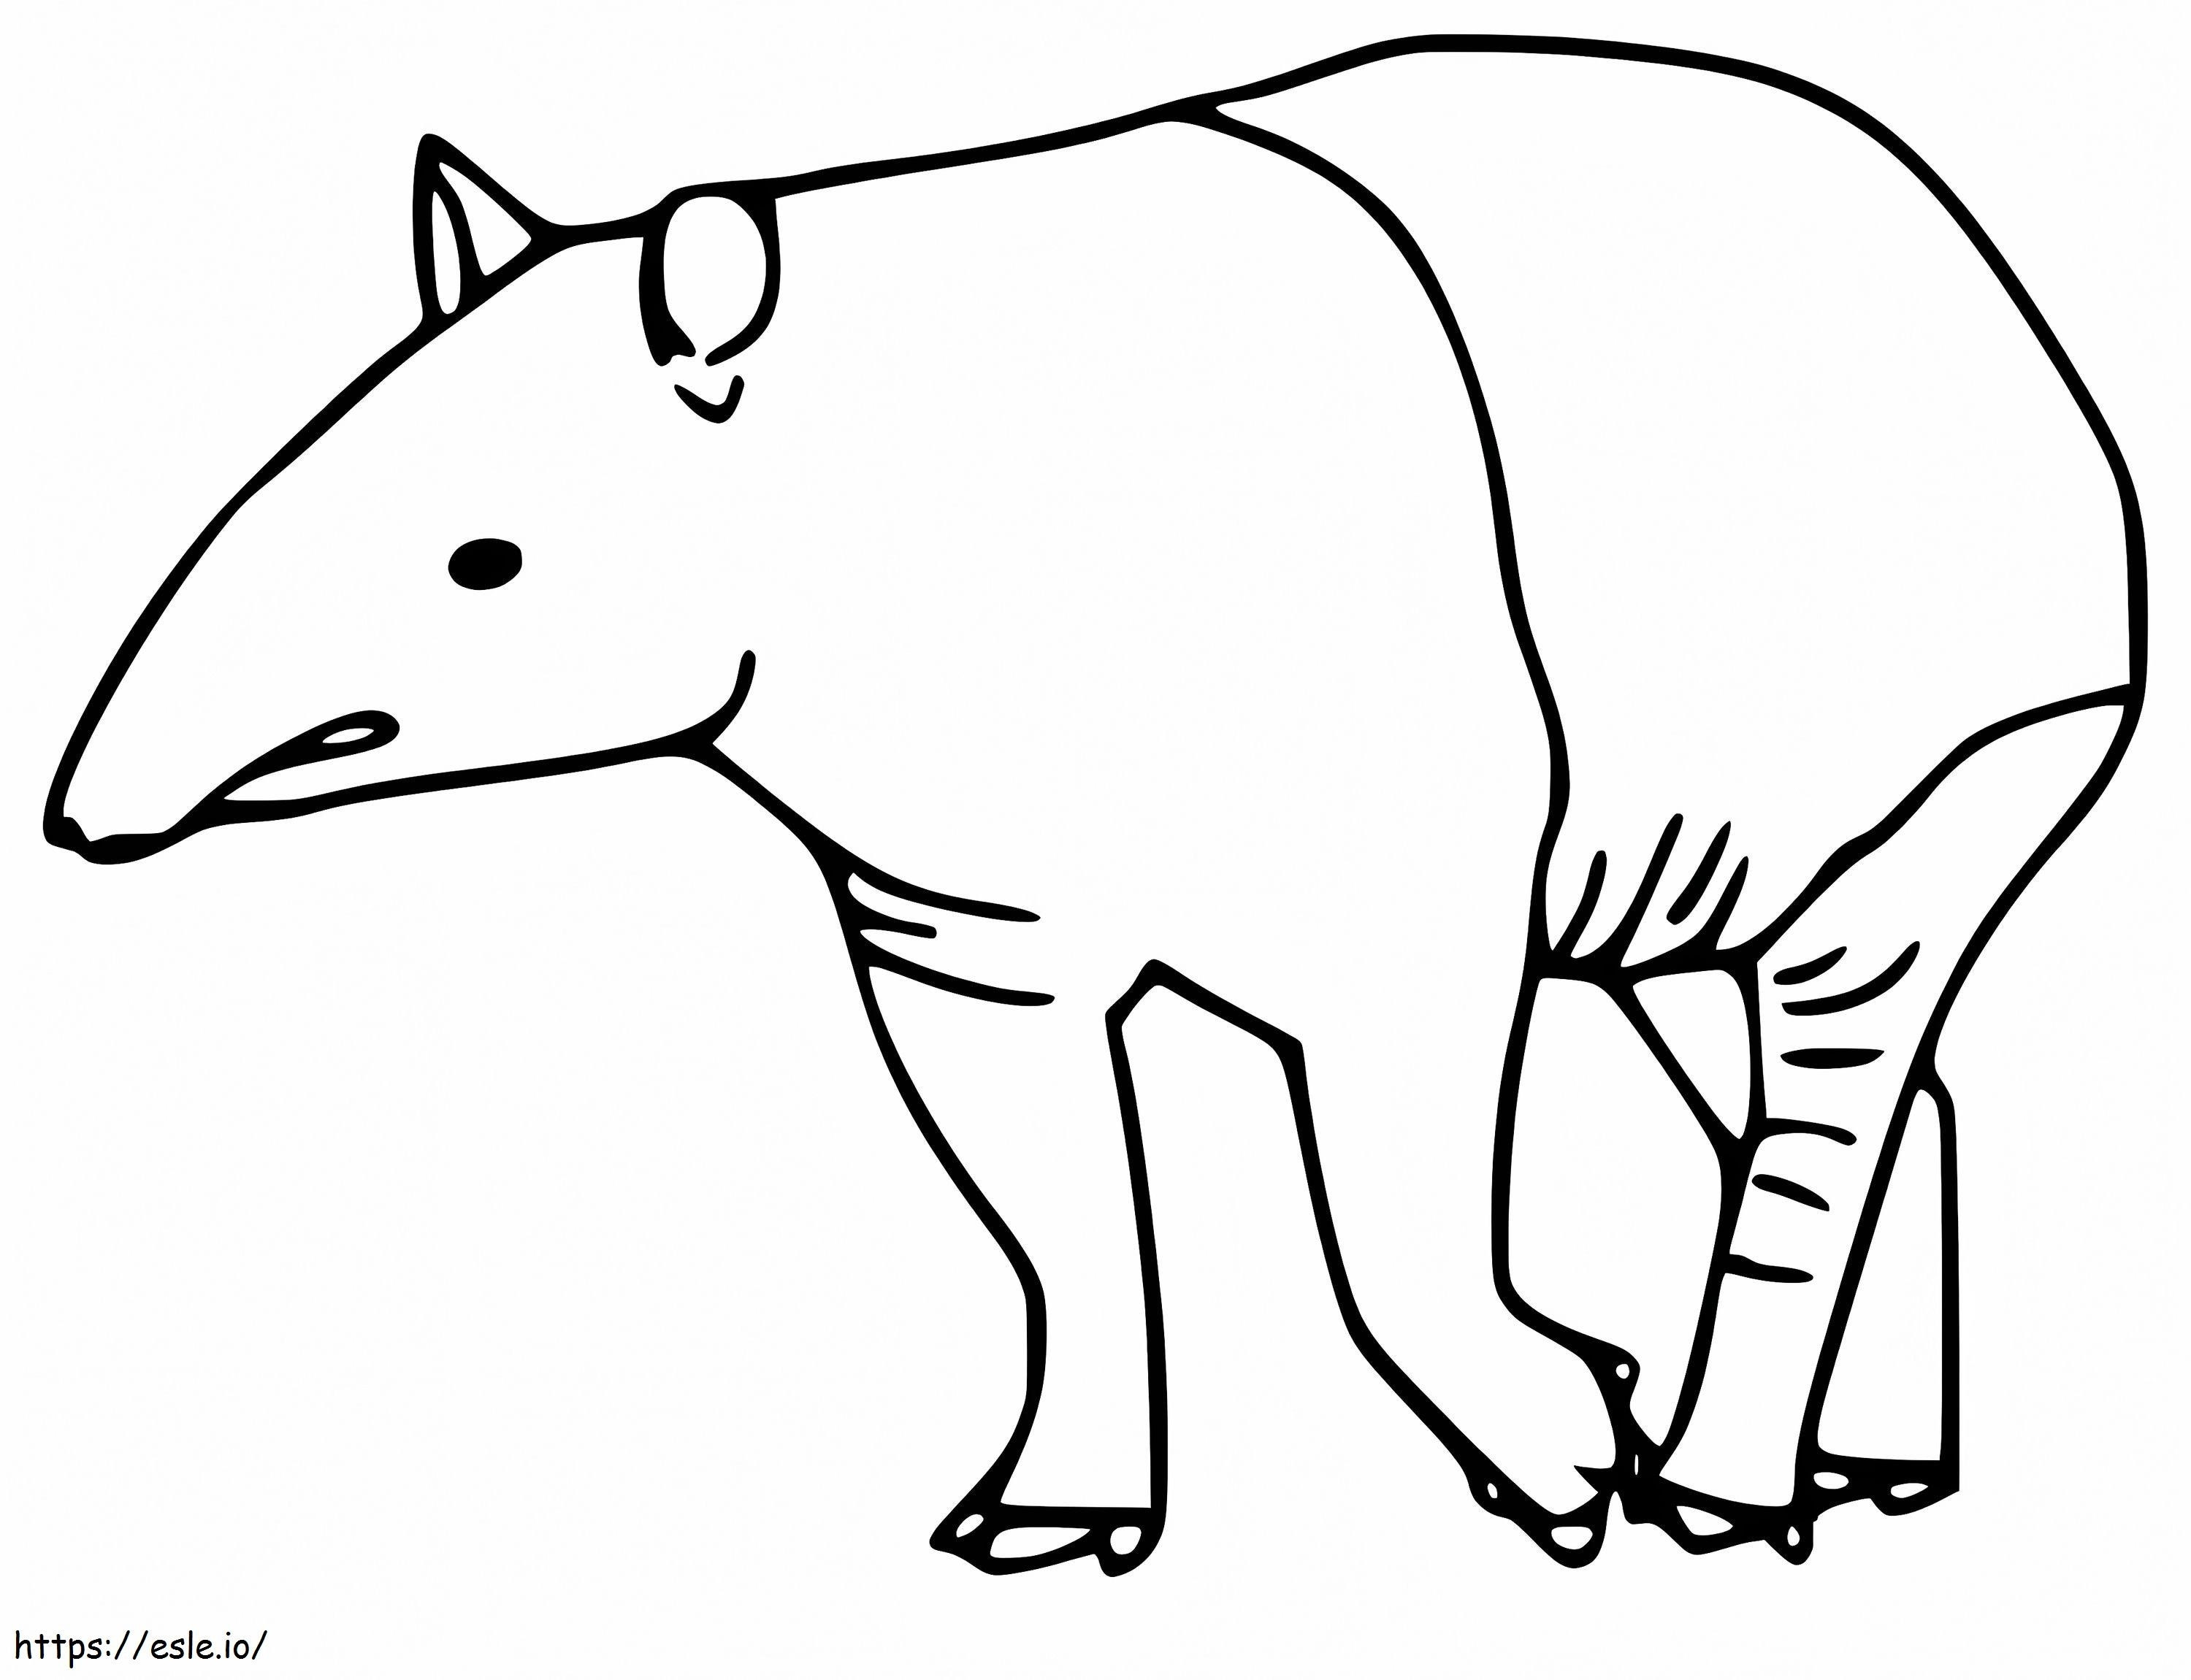 Coloriage Tapir imprimable à imprimer dessin